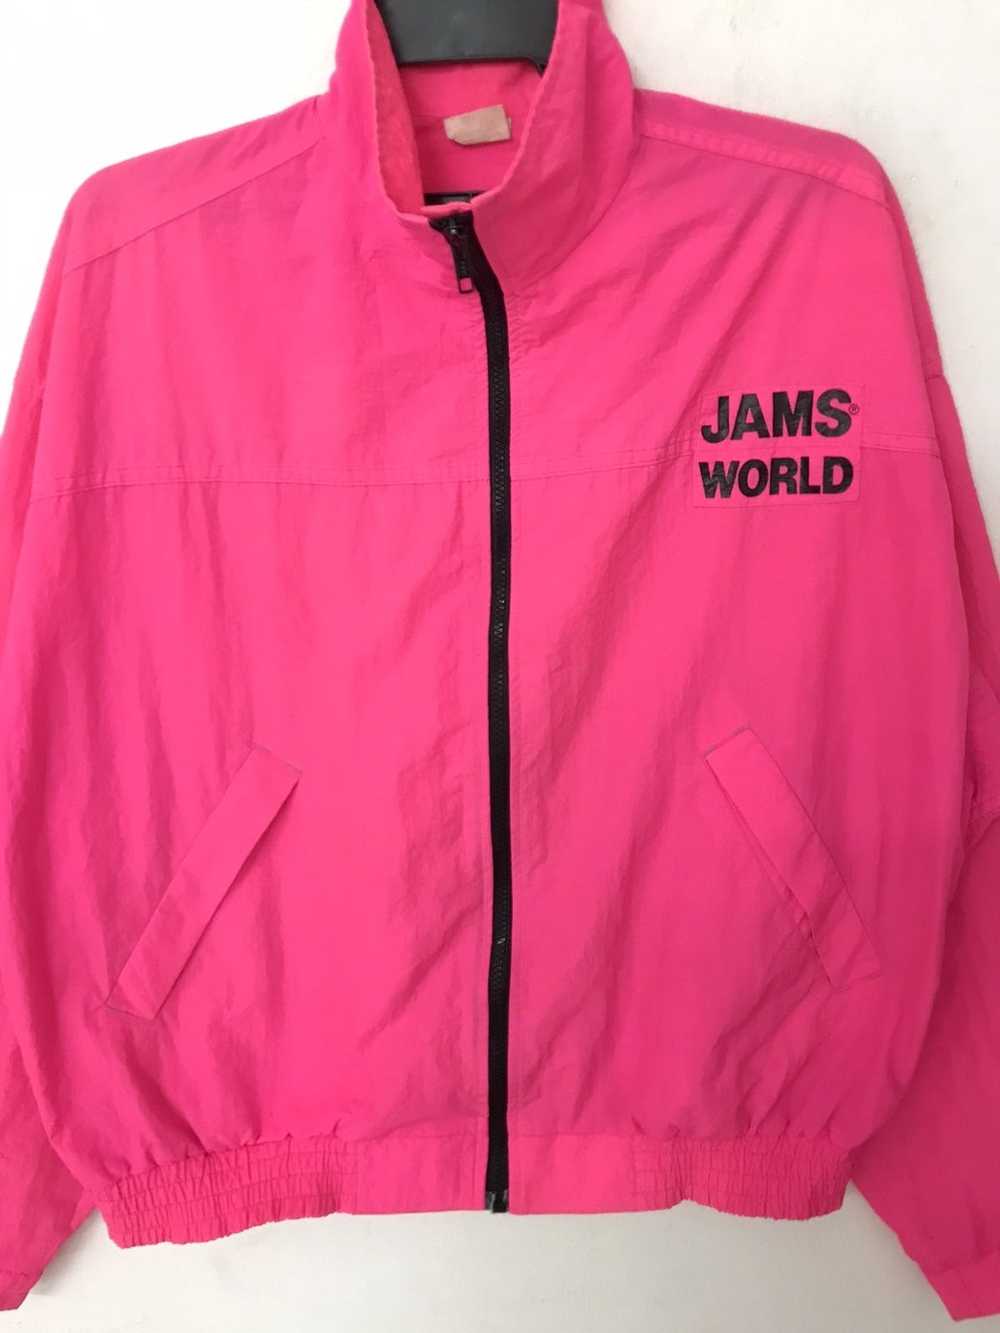 Jams World Jams World Light Jacket / Windbreaker - image 2